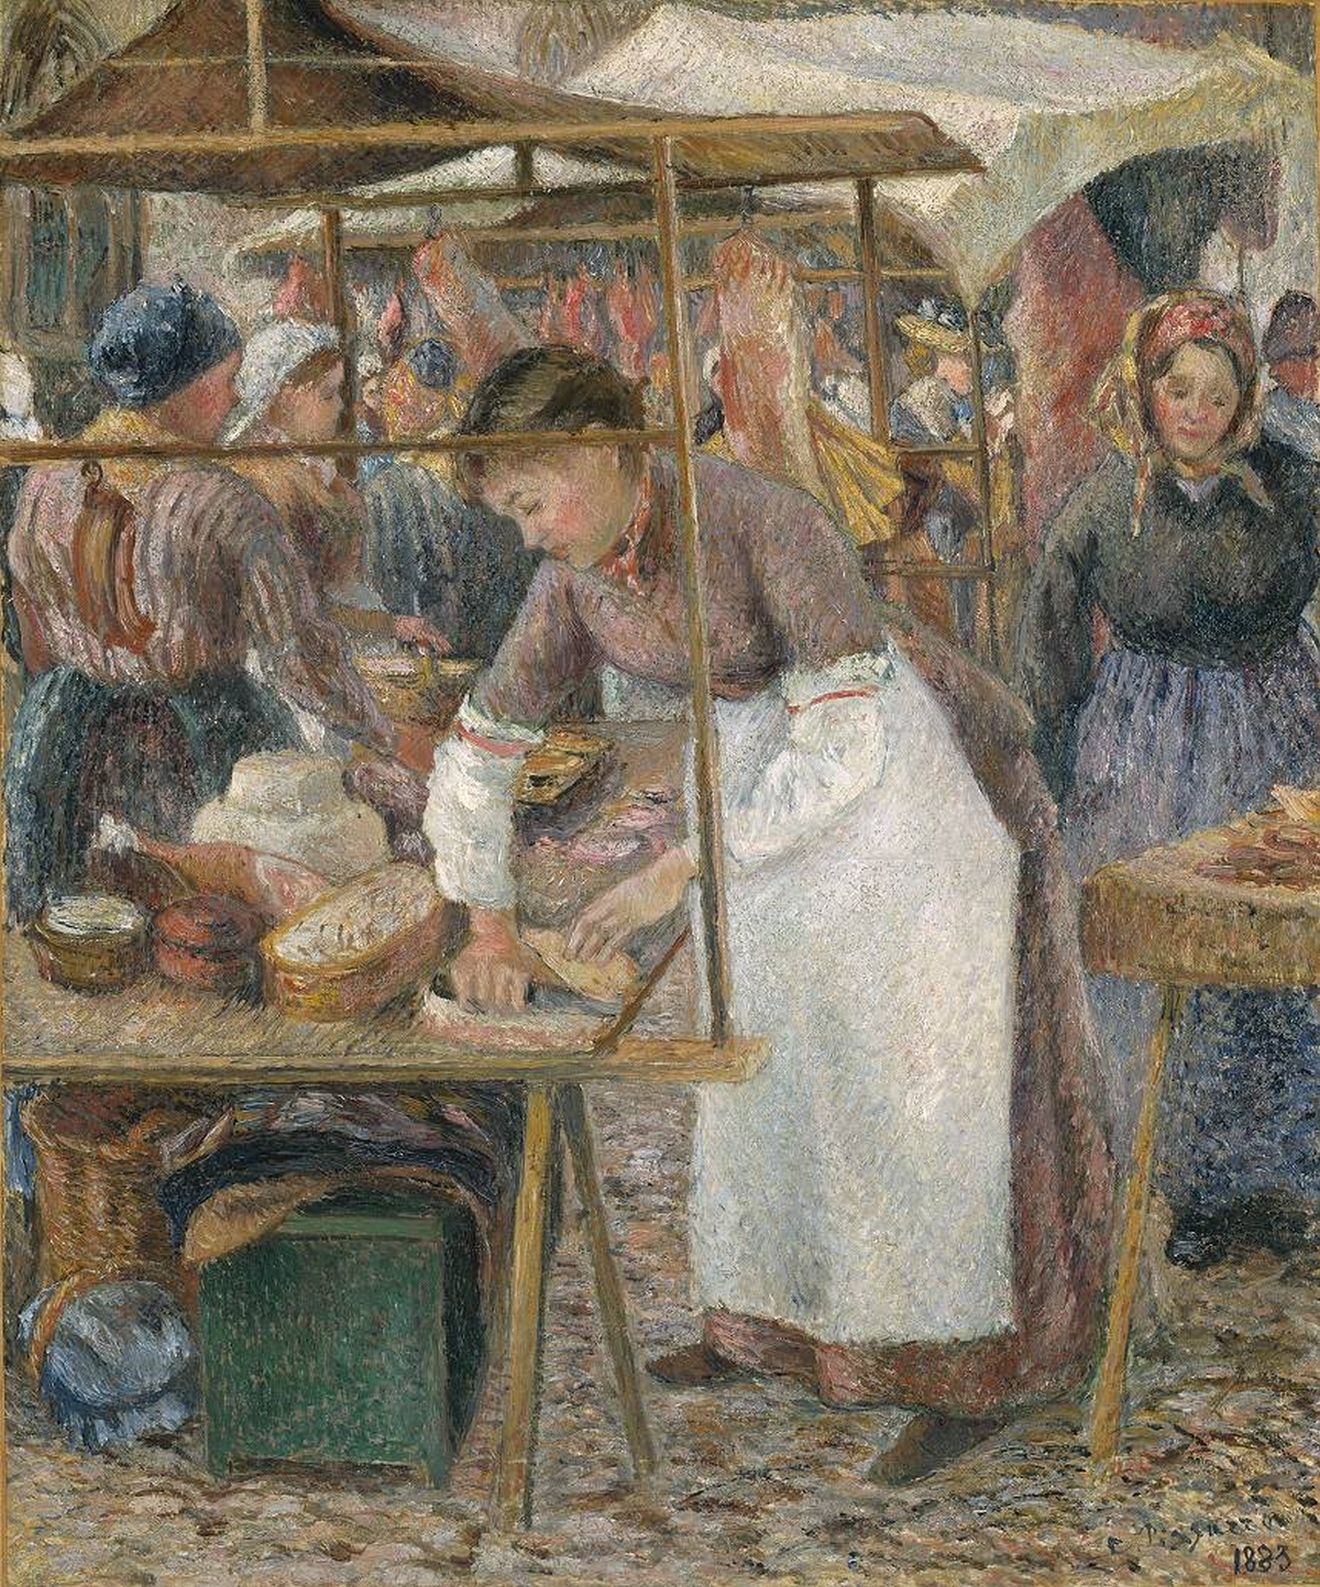 Camille+Pissarro-1830-1903 (220).jpg